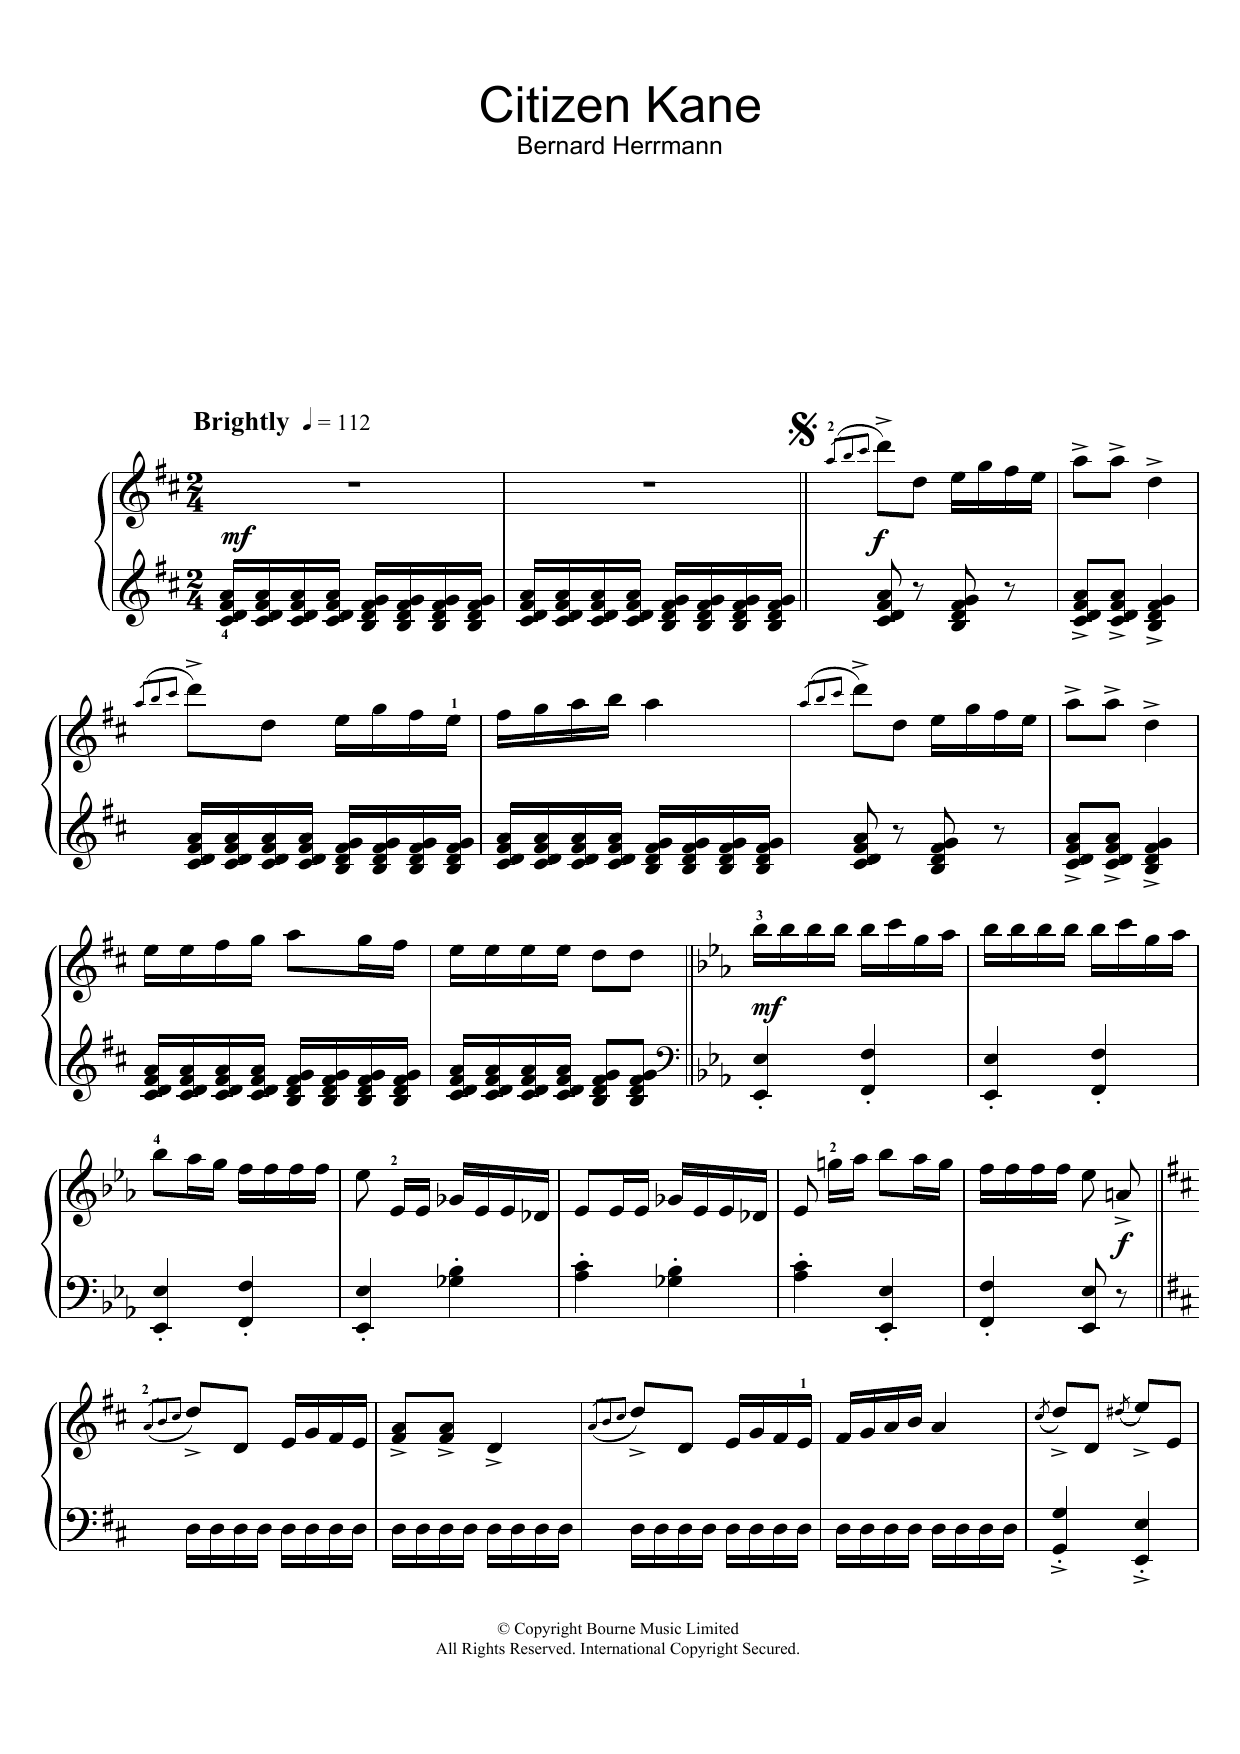 Bernard Herrmann Citizen Kane (Overture) Sheet Music Notes & Chords for Piano - Download or Print PDF